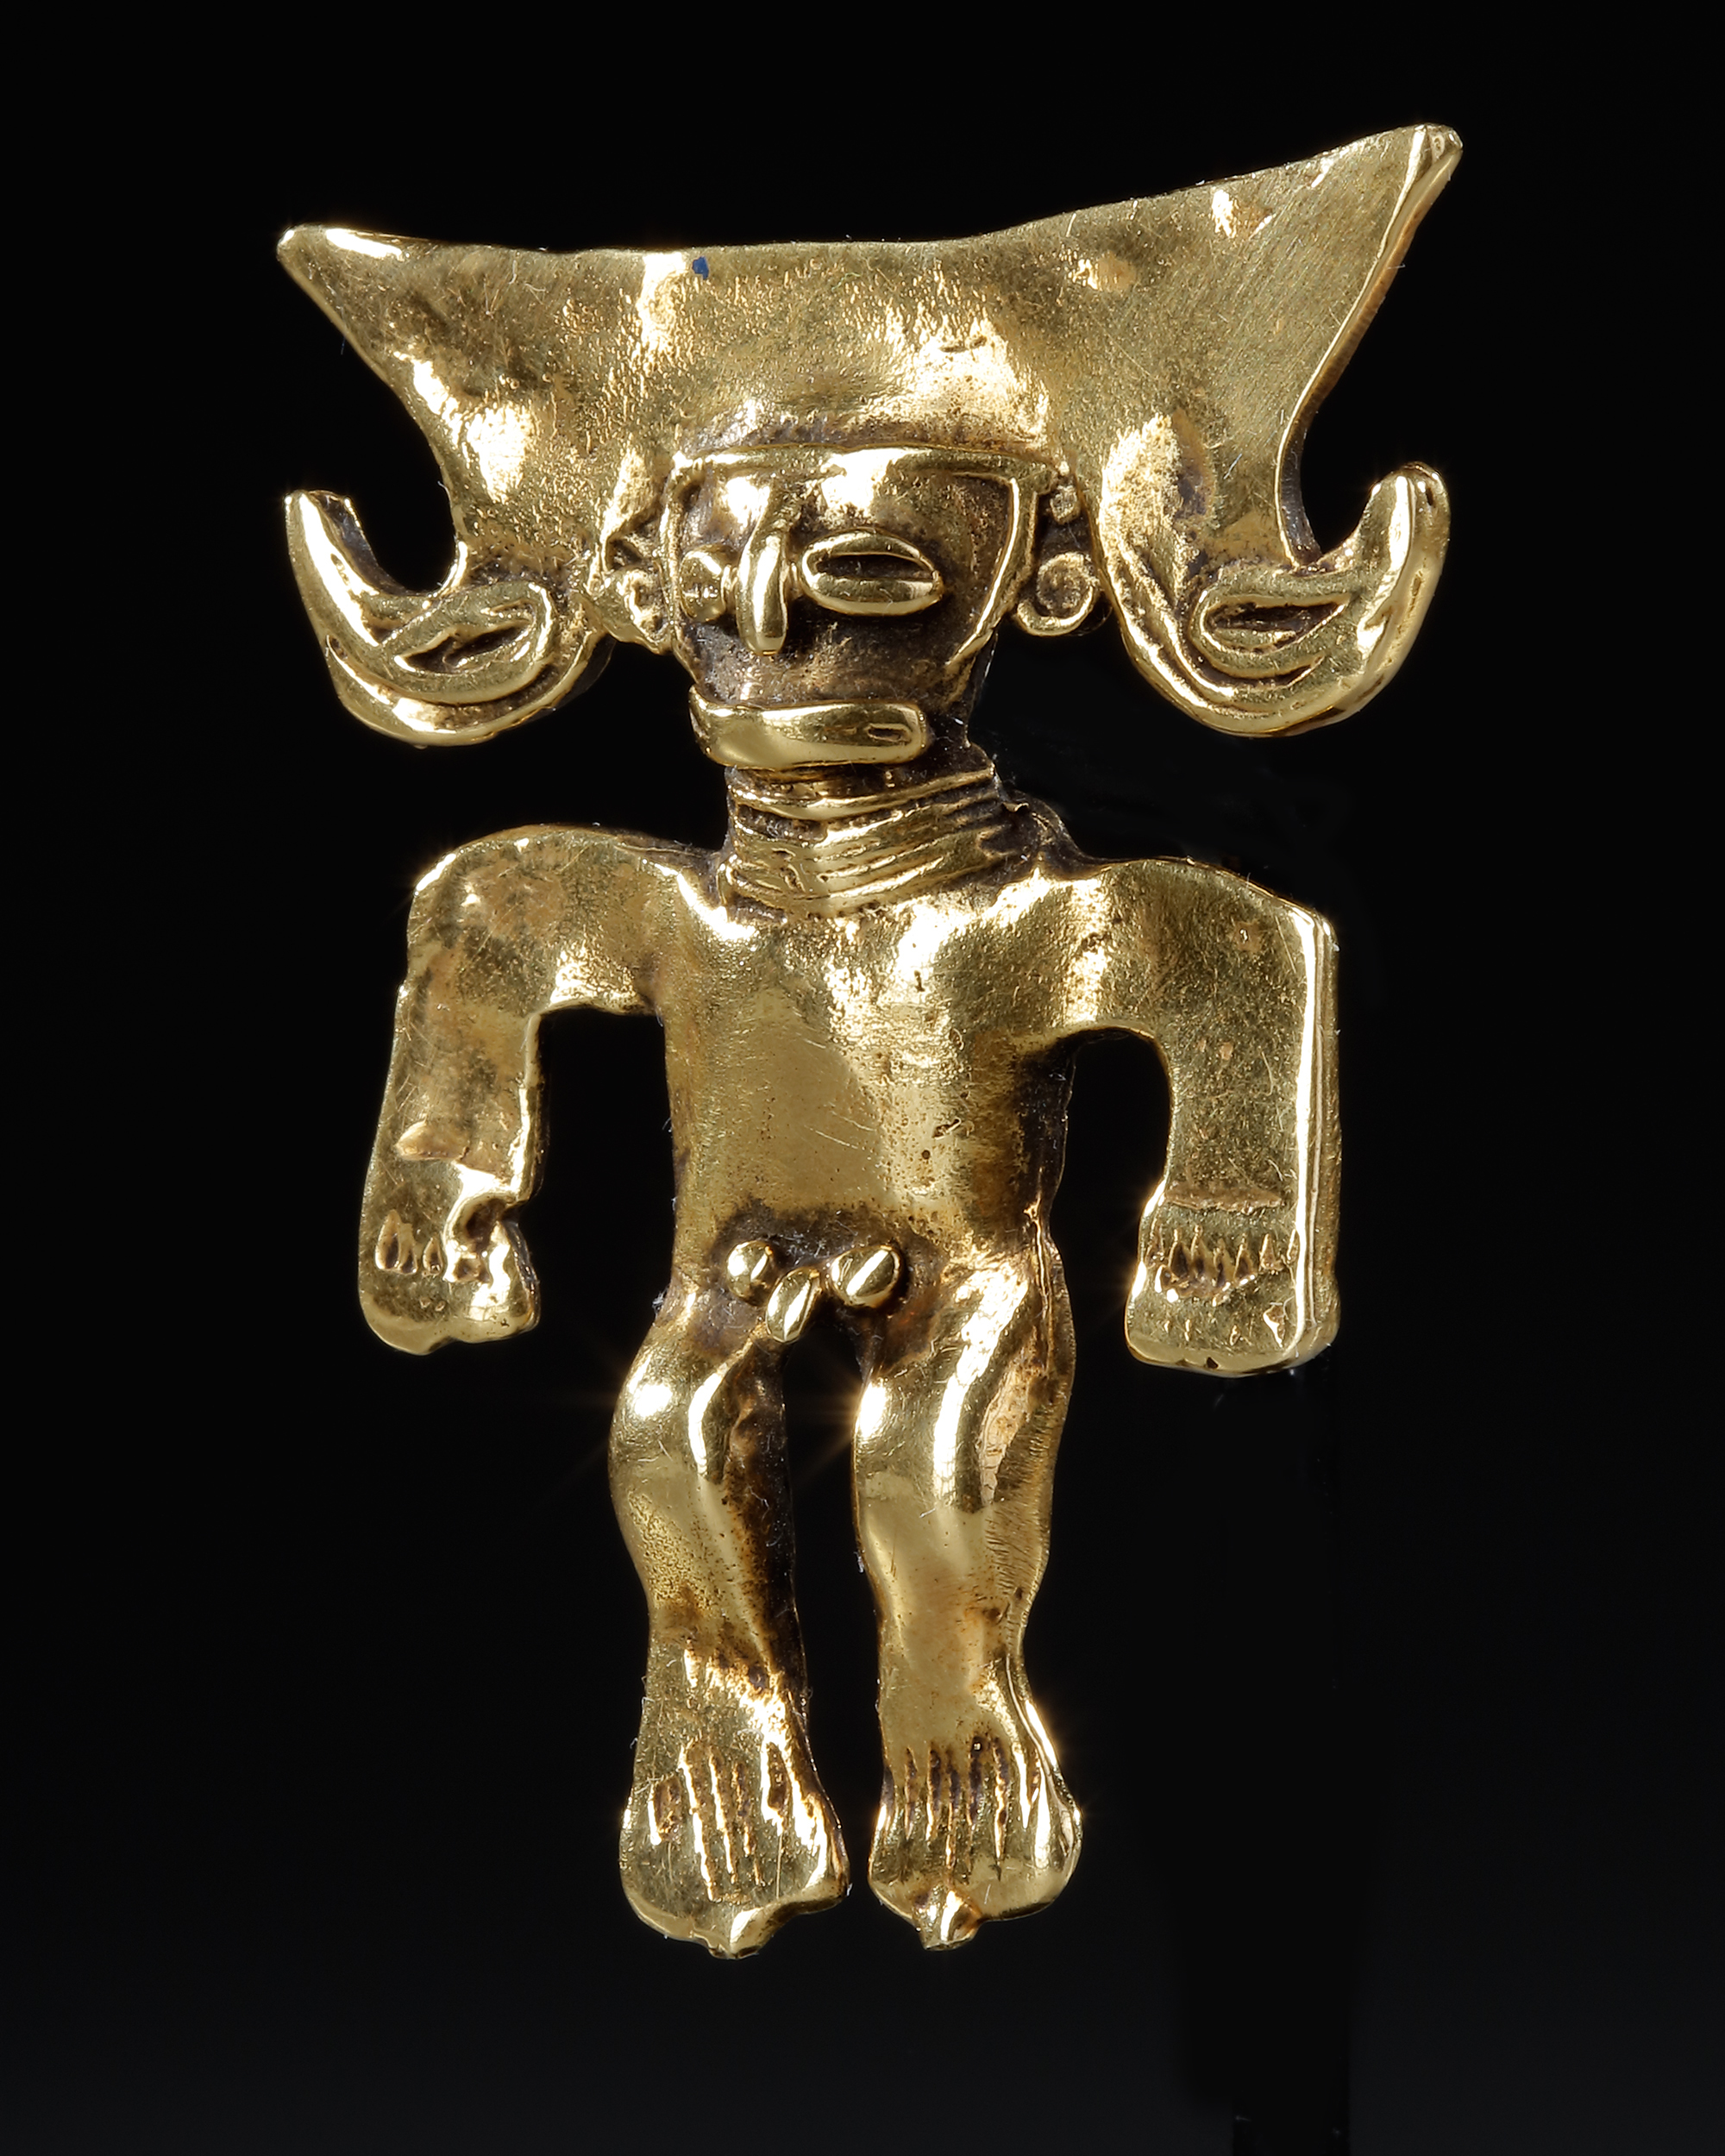 A PRE COLOMBIAN GOLD FIGURE, CIRCA 800-1200 A.D